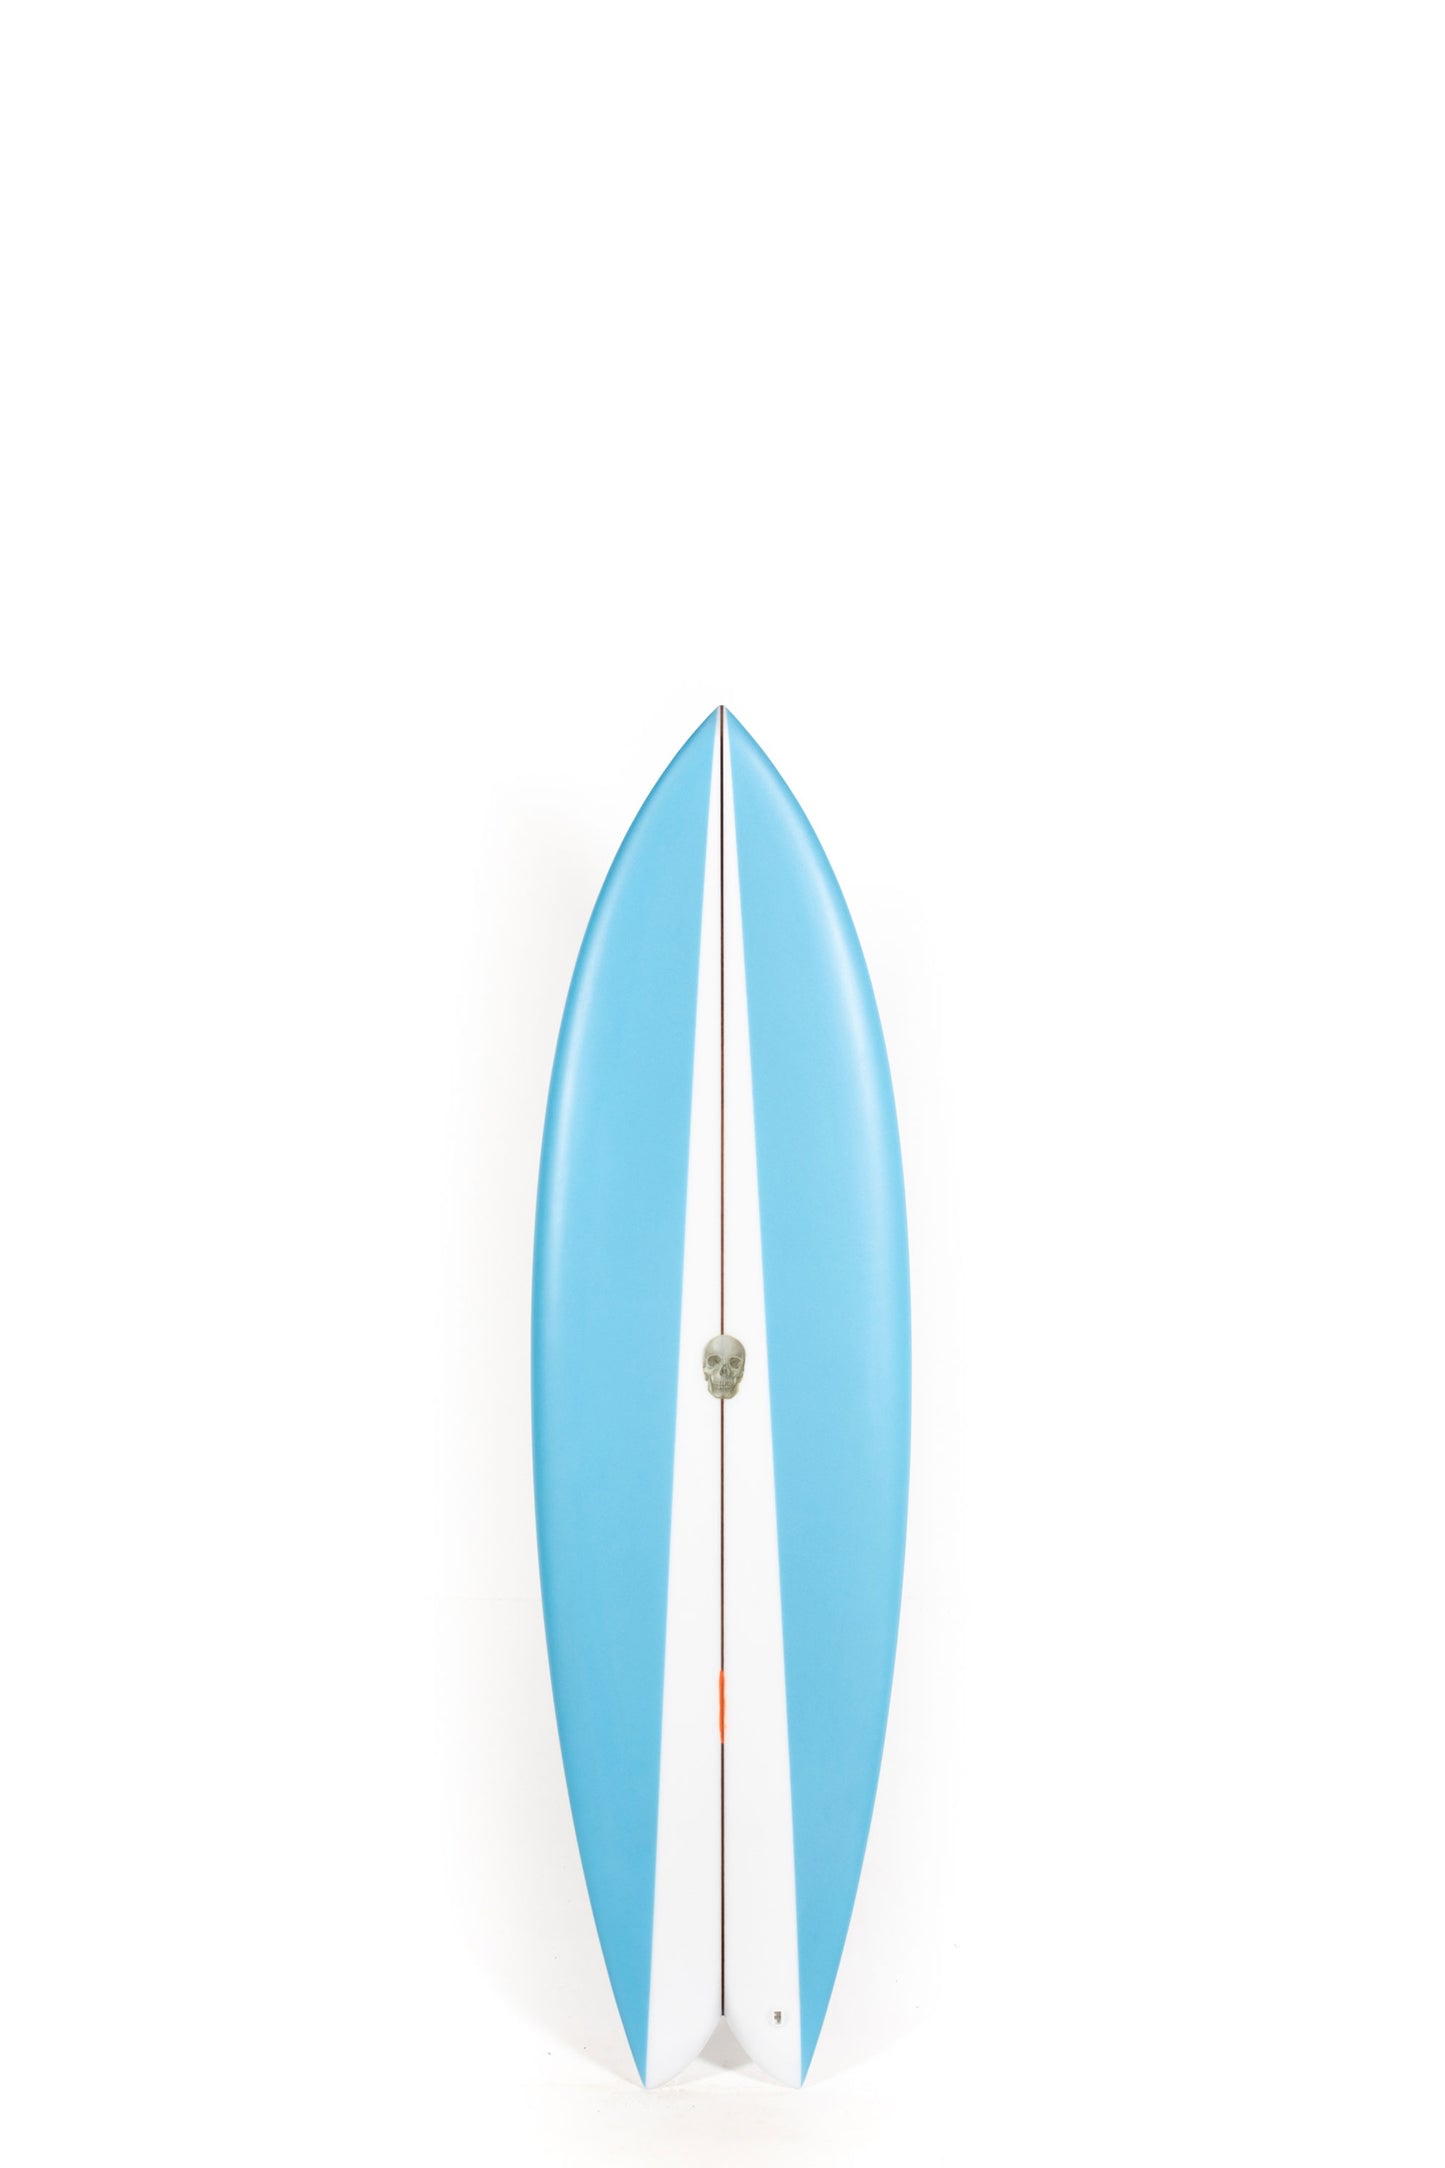 Puka sSurf Shop - Christenson Surfboards - NAUTILUS - 6'0" x 20 x 2 7/16 - CX05014